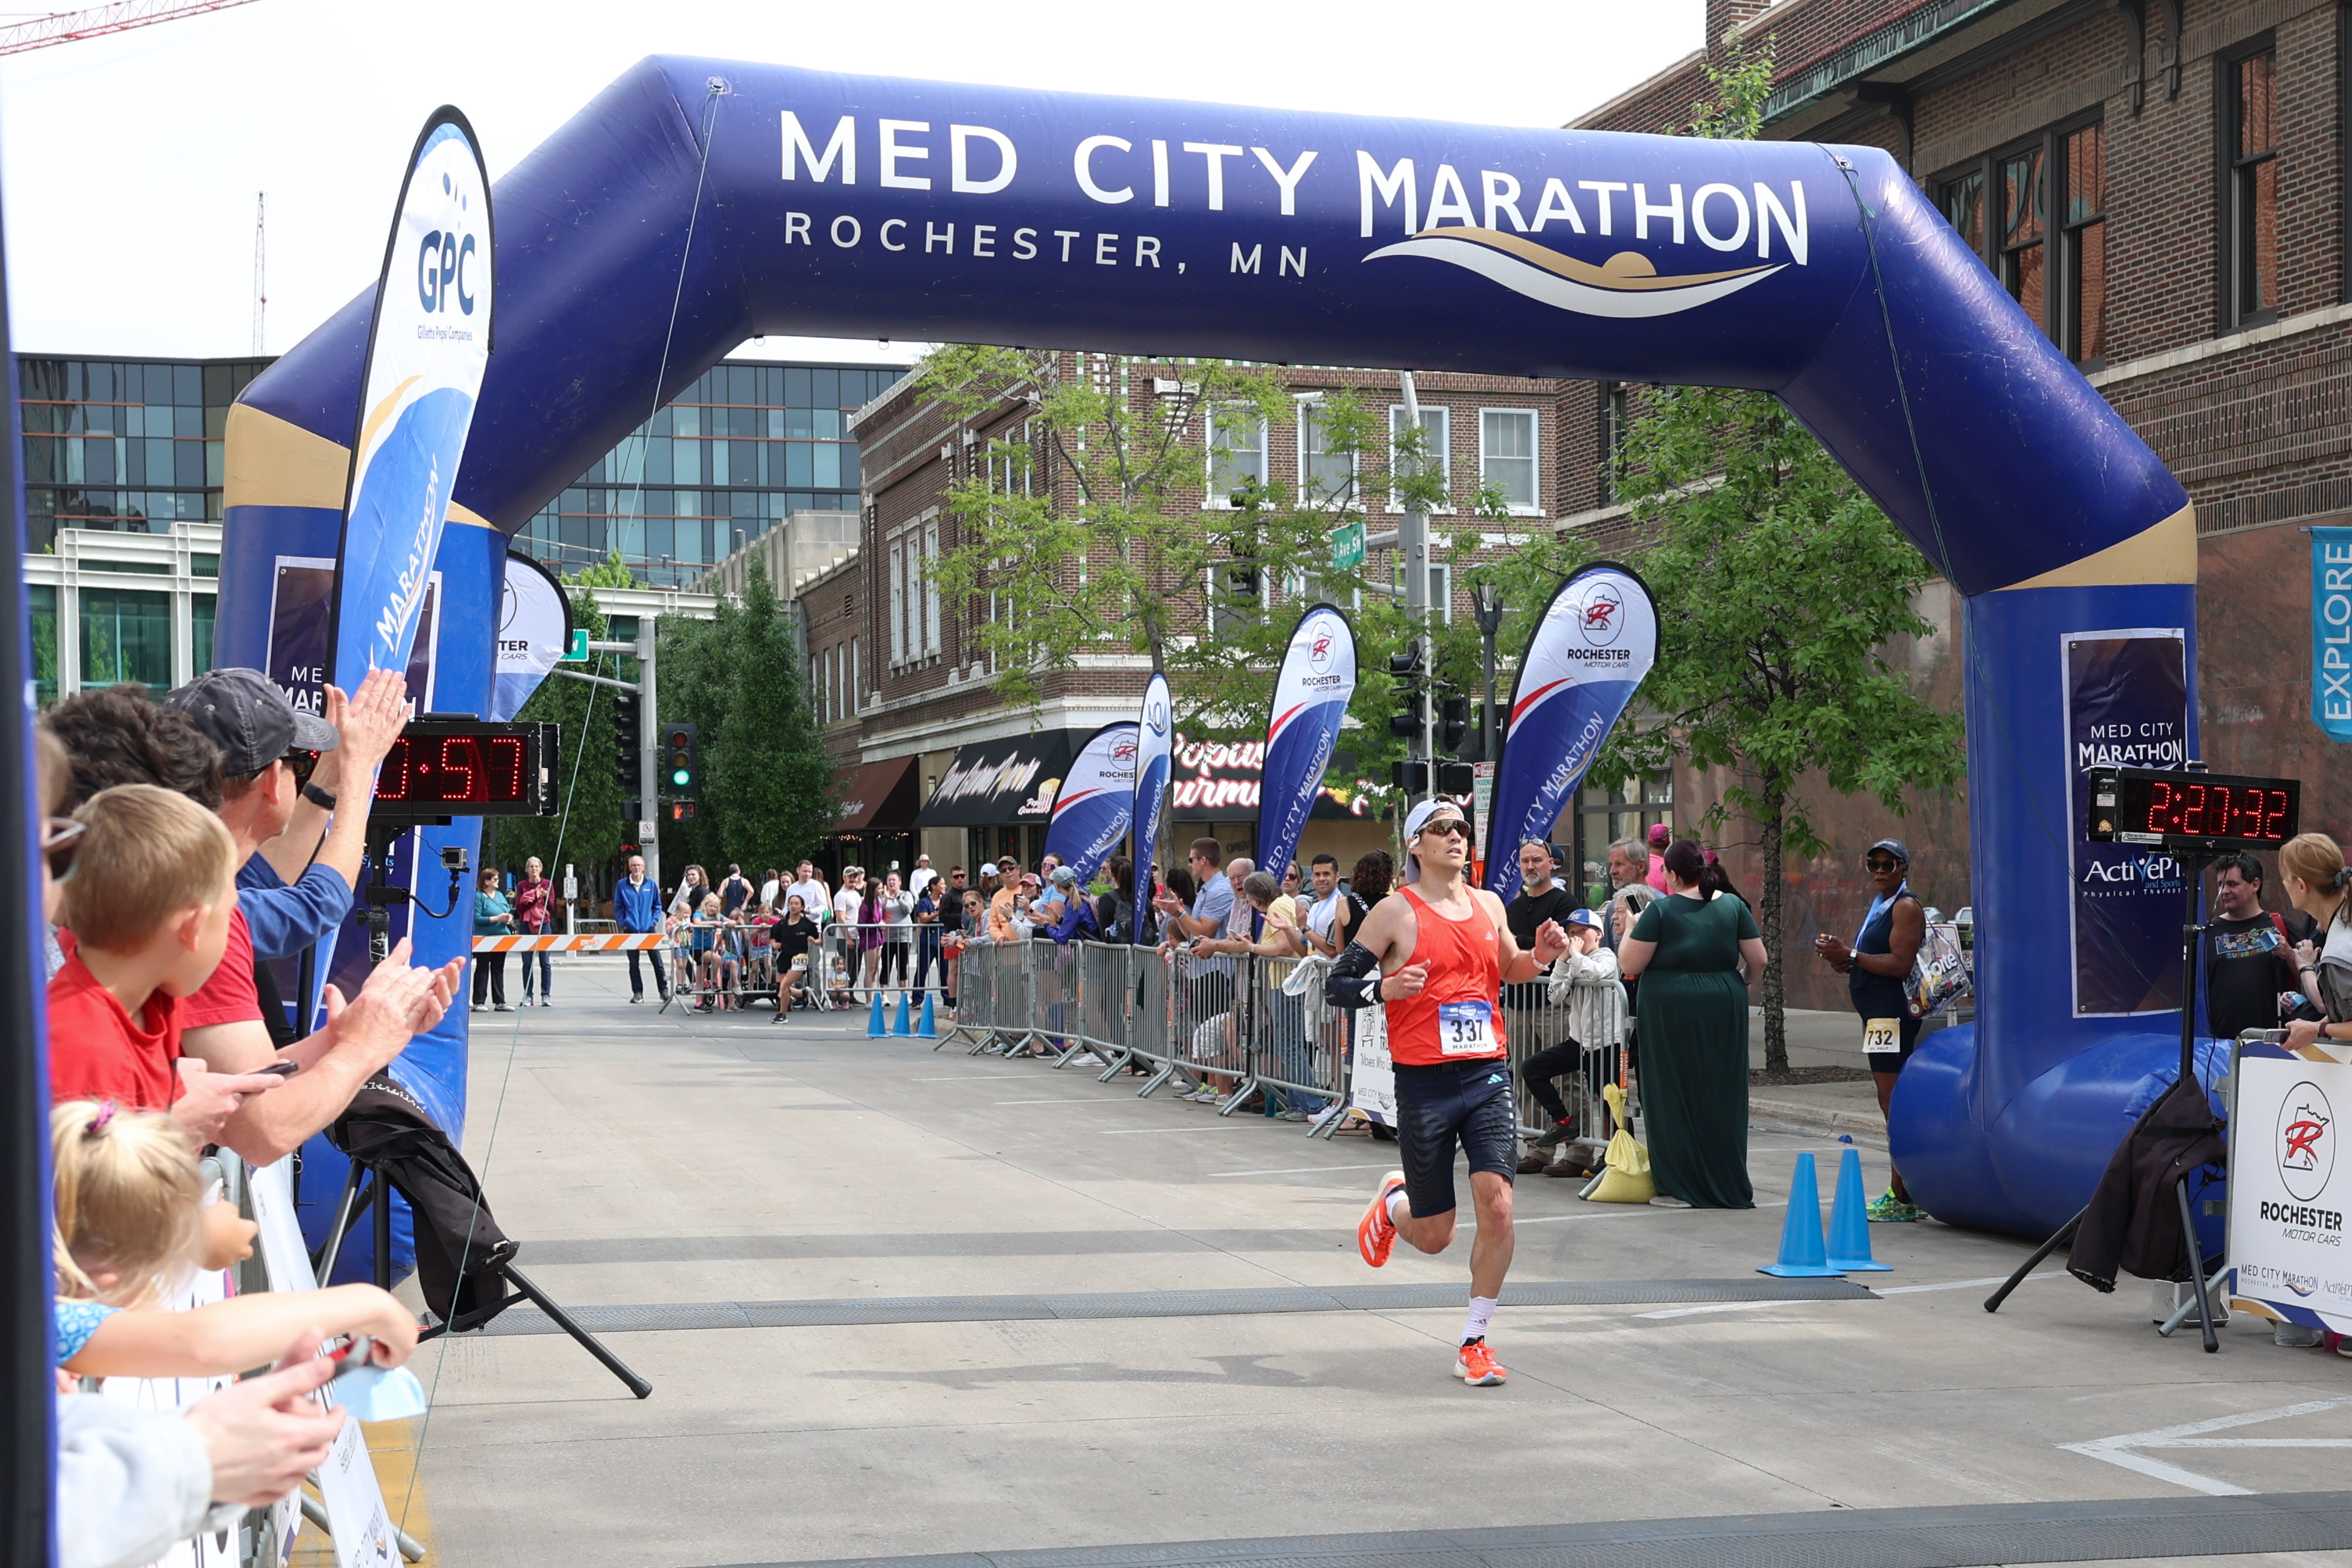 Men's Med City Marathon winner said race checked every box